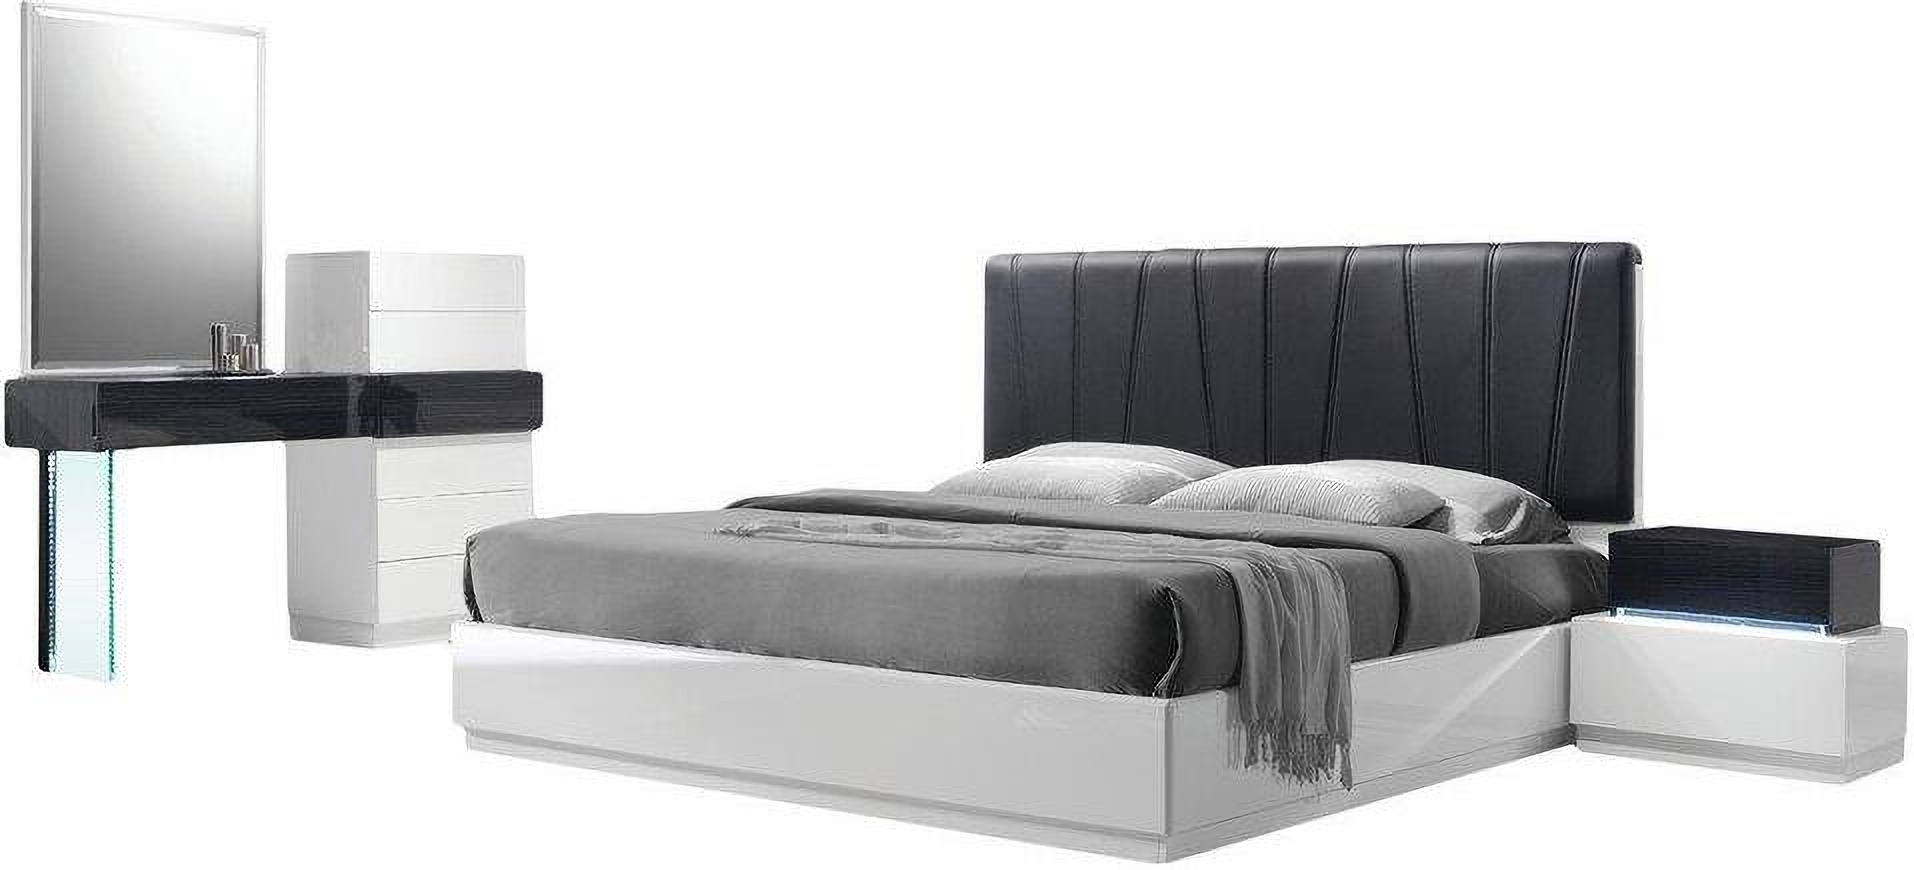 https://cdn.1stopbedrooms.com/media/catalog/product/m/o/modern-5-piece-california-king-platform-bedroom-set-in-white-and-black_qb13435701.jpg